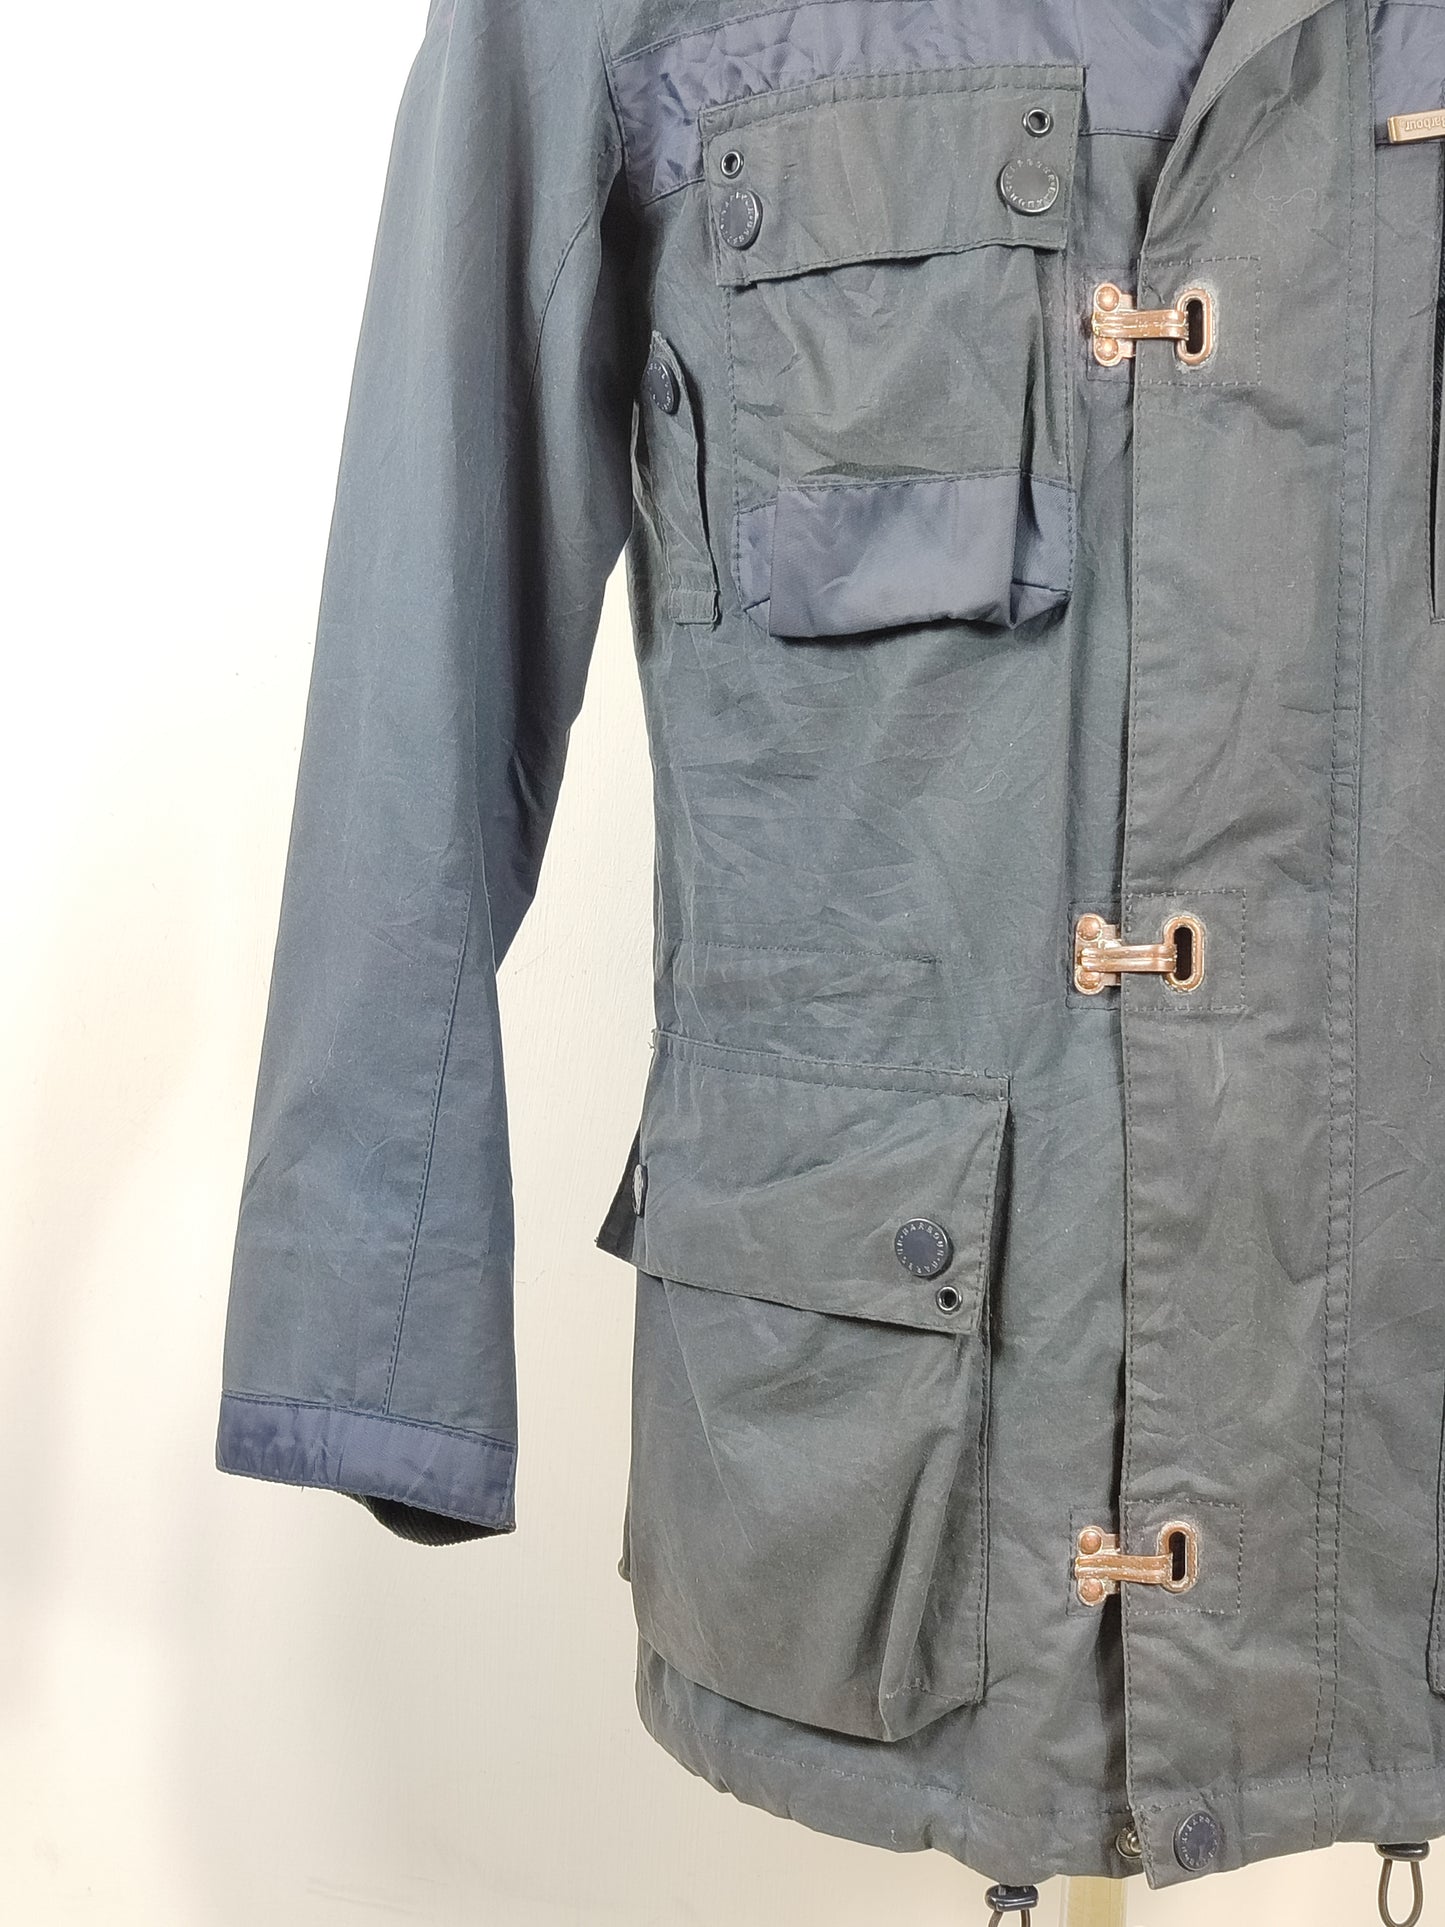 Giacca Barbour blu da uomo Small Masthead - Man Navy Masthead wax jacket size Small